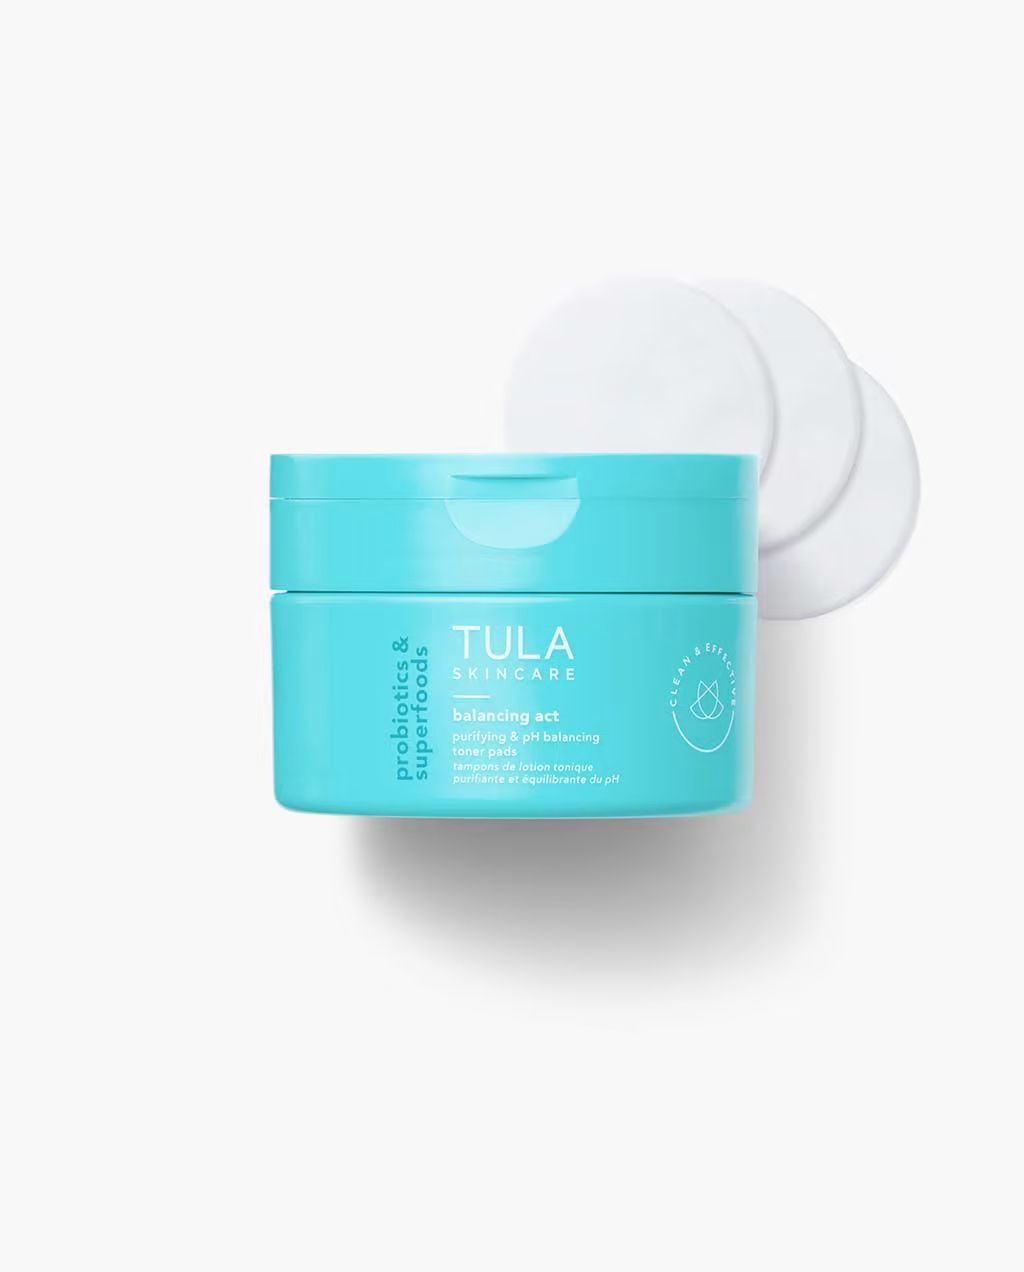 purifying & pH balancing biodegradable toner pads | Tula Skincare